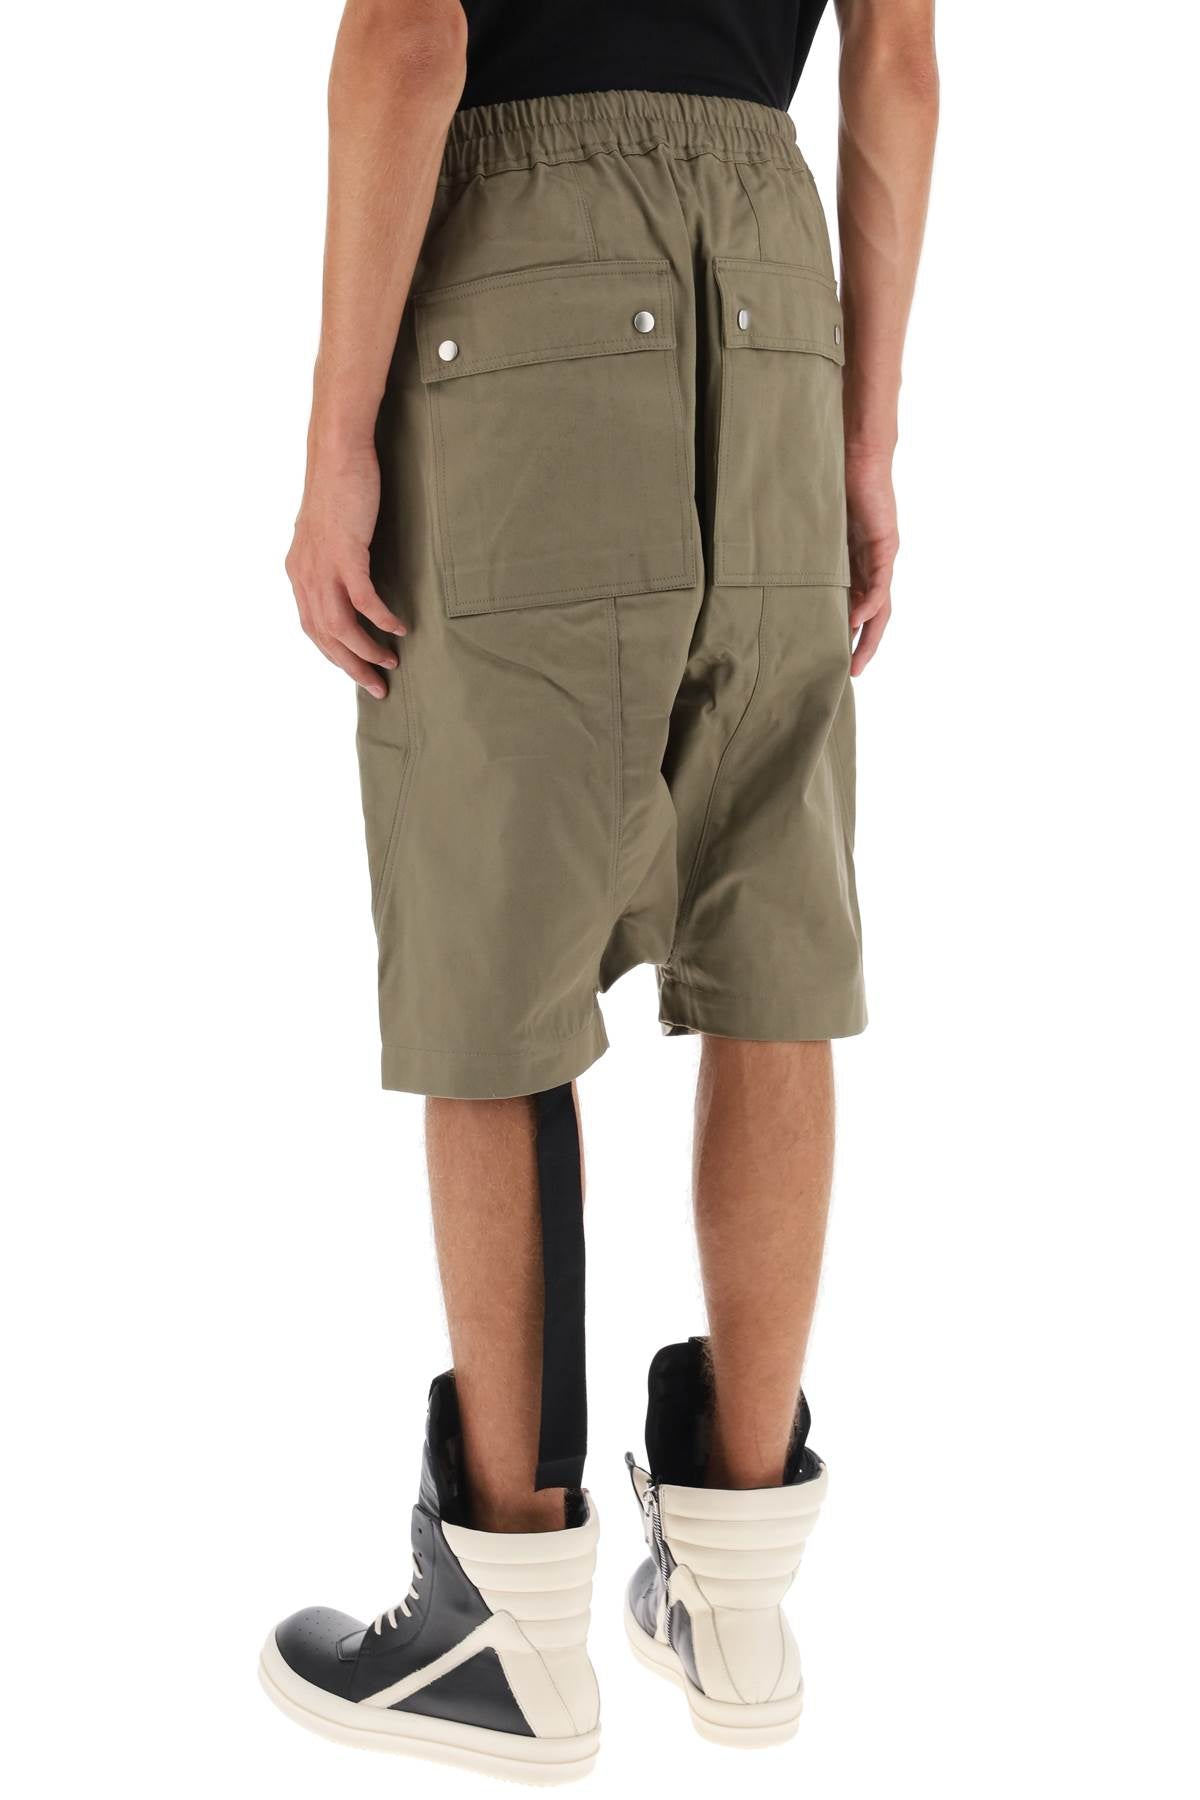 DRKSHDW Green Bauhaus Shorts for Men - FW23